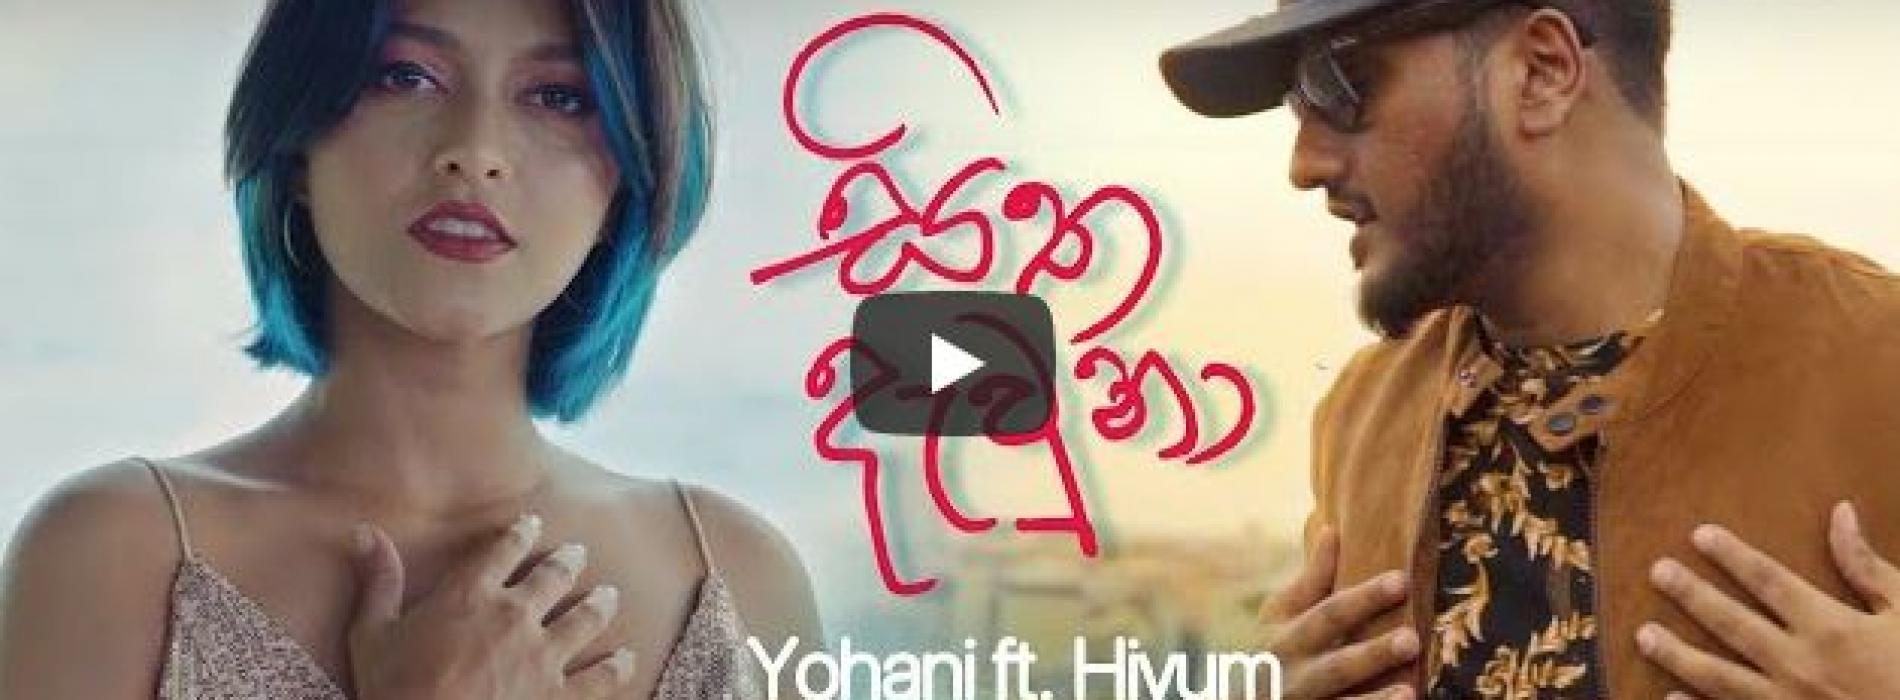 New Music : Yohani ft Hiyum – Sitha Dawuna සිත දැවුනා | Chamath Sangeeth (Official Music Video)